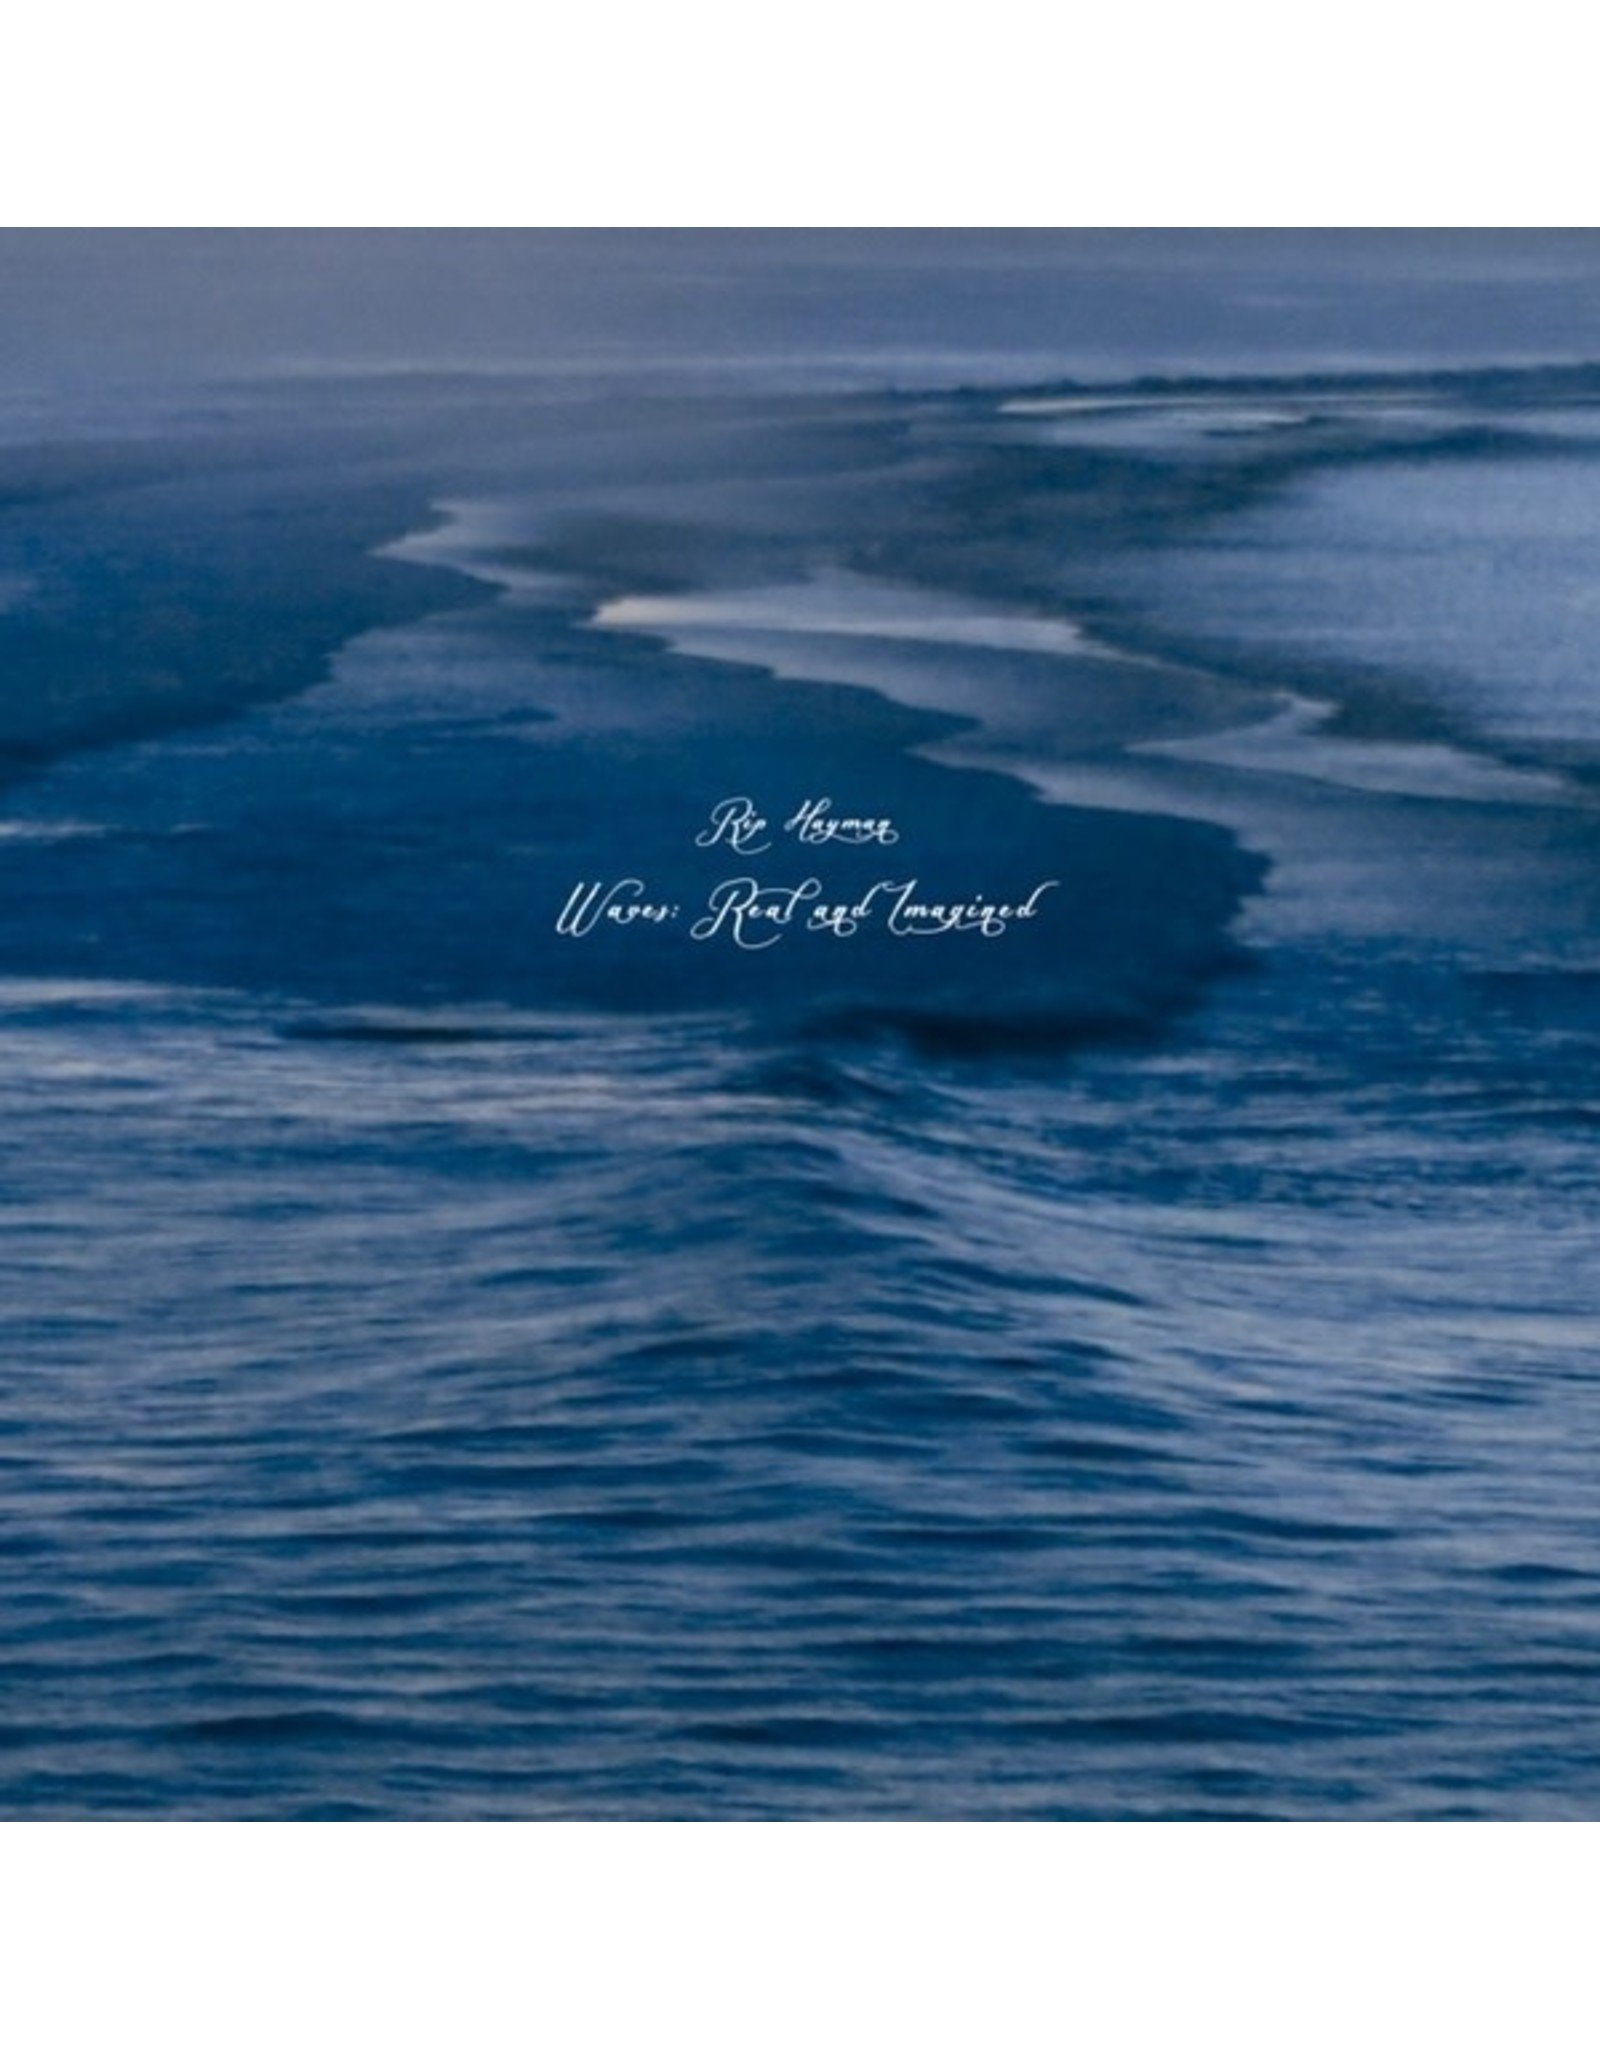 Recital Hayman, Rip: Waves: Real and Imagined LP